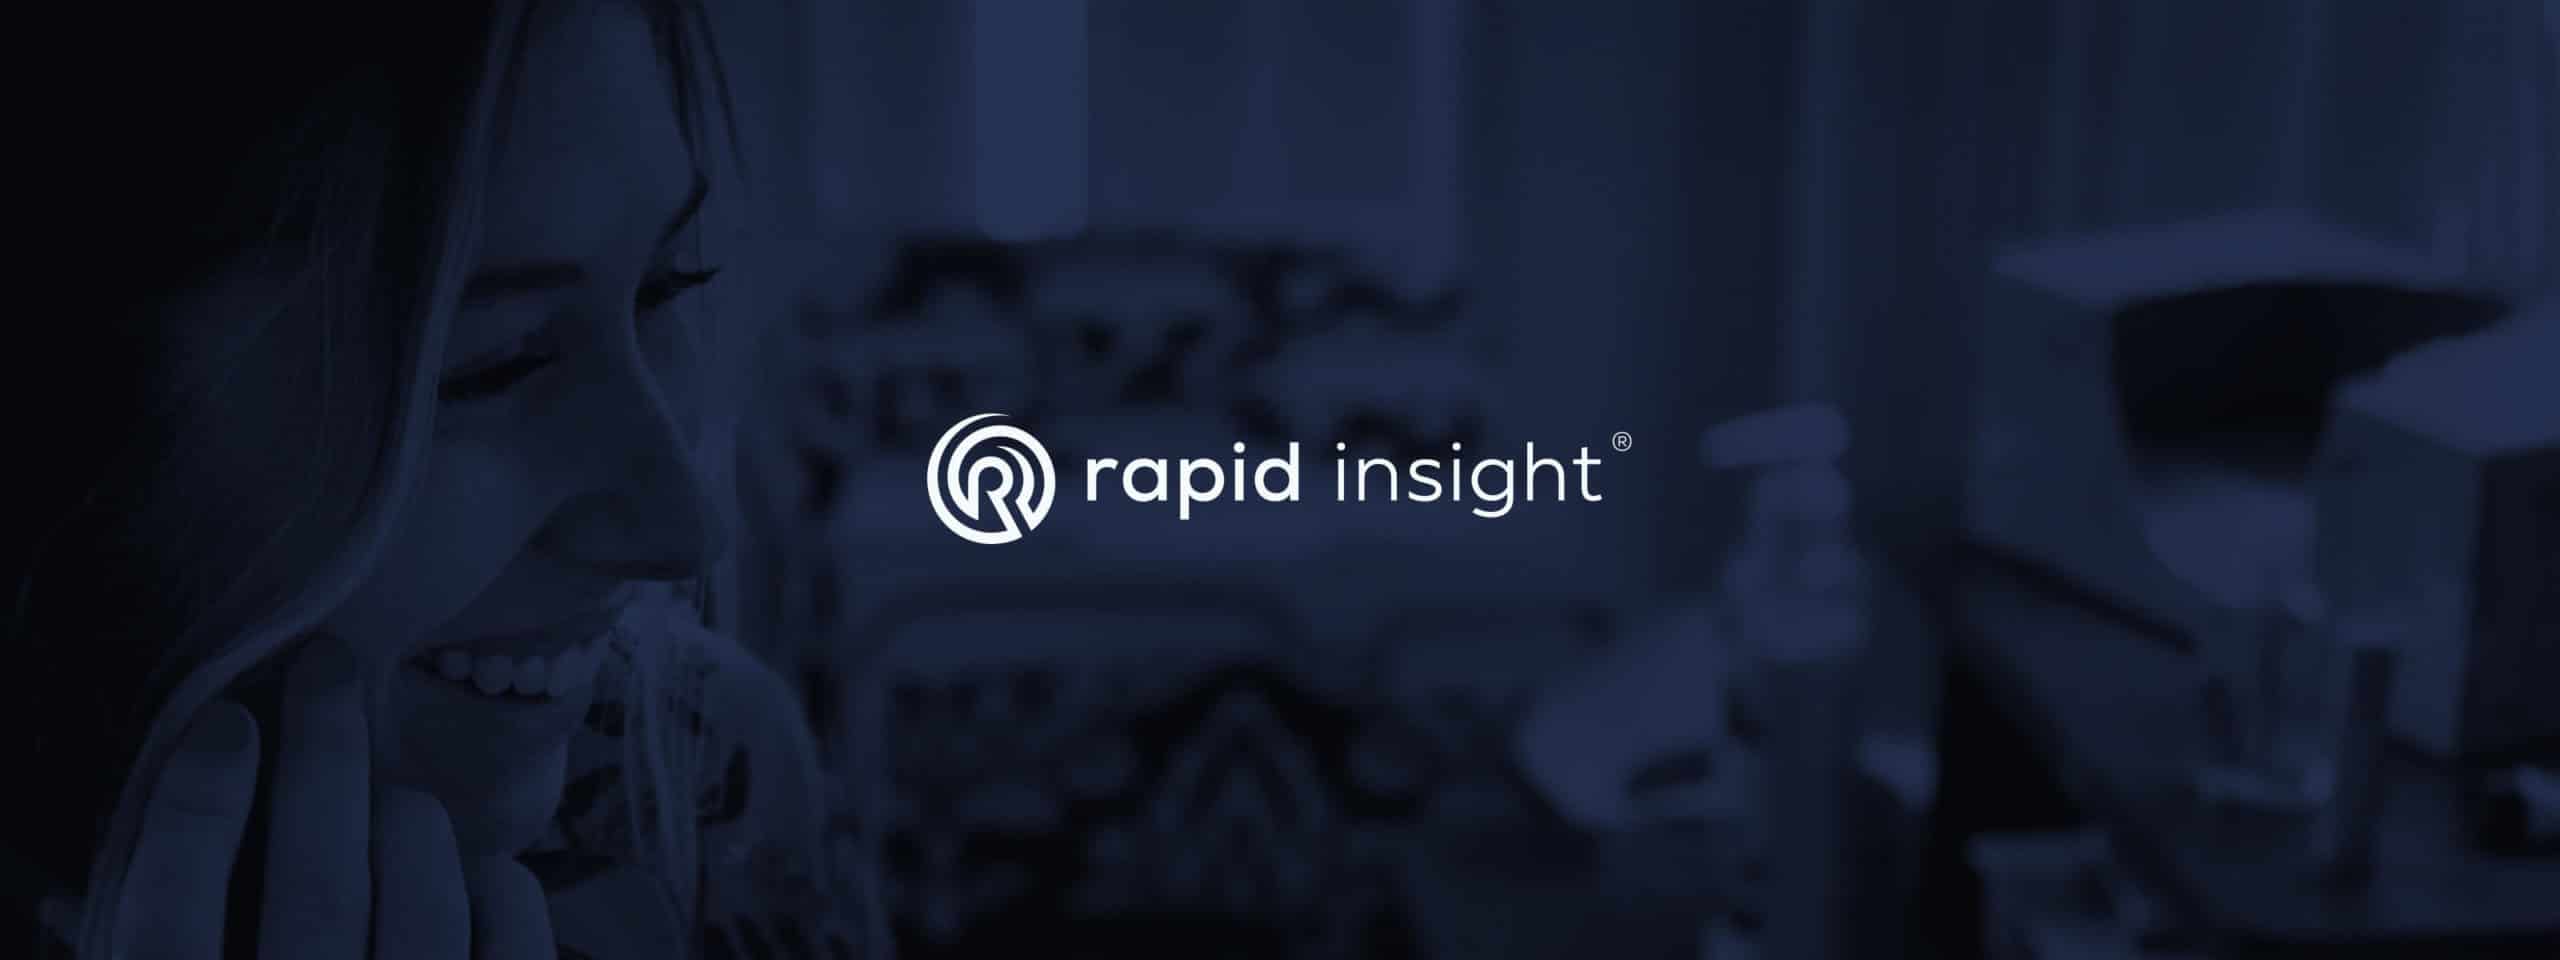 Rapid Insight logo and hero